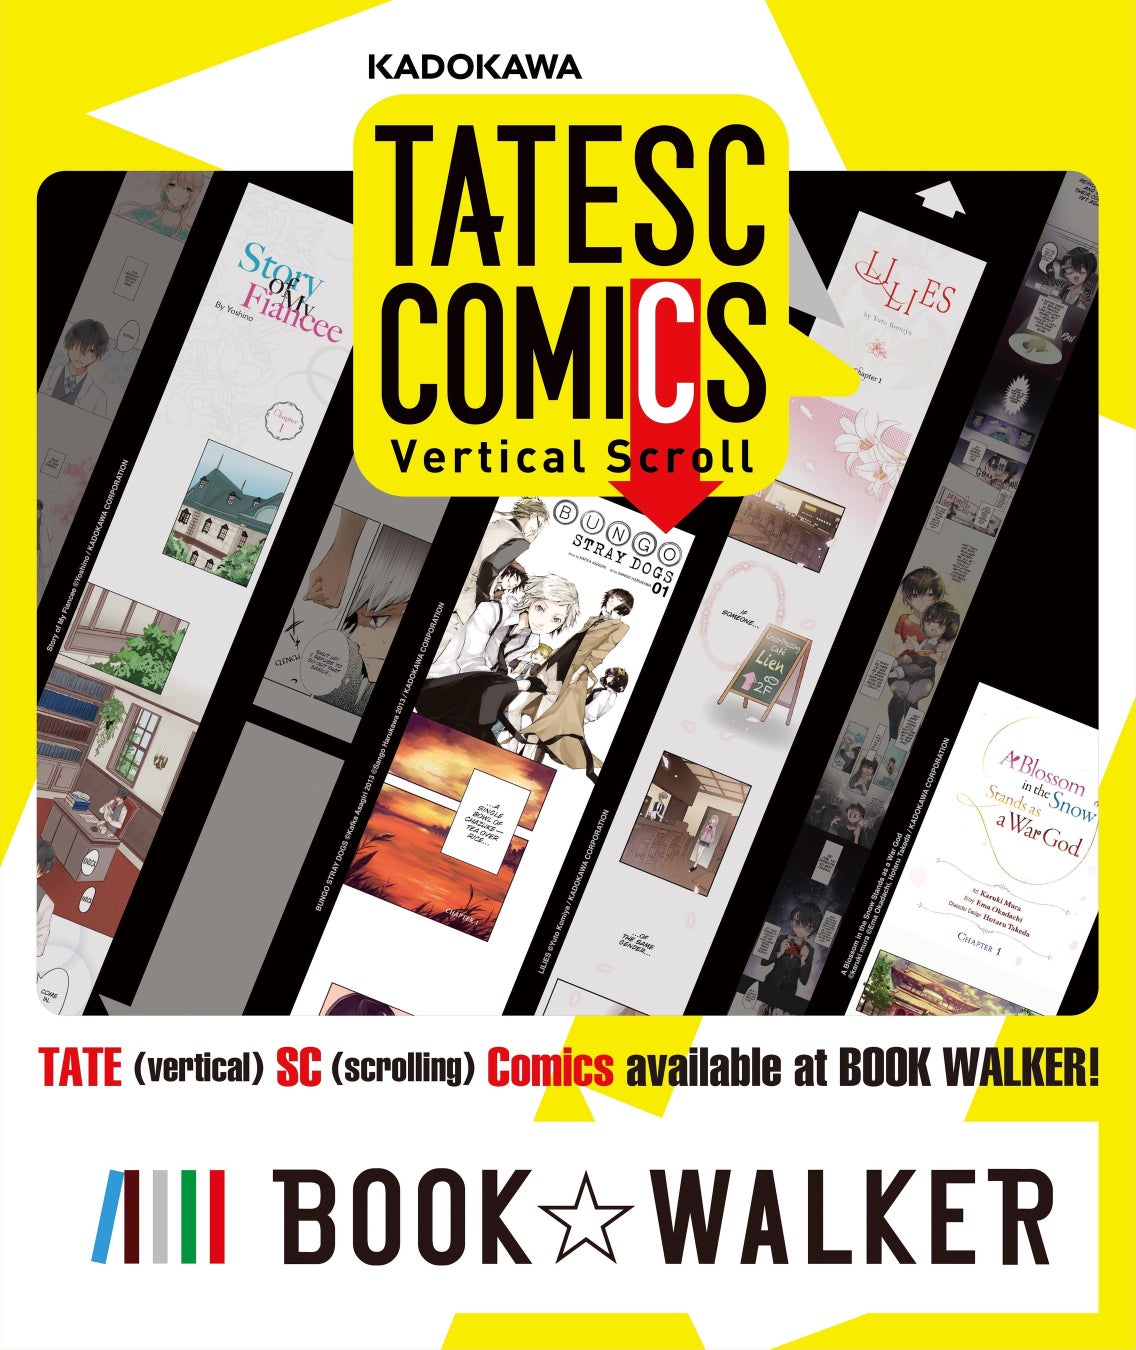 KADOKAWAによる縦スクロール型コミック「タテスクコミック」、英語版「TATESC COMICS」をBOOK☆WALKER Globalで世界展開開始